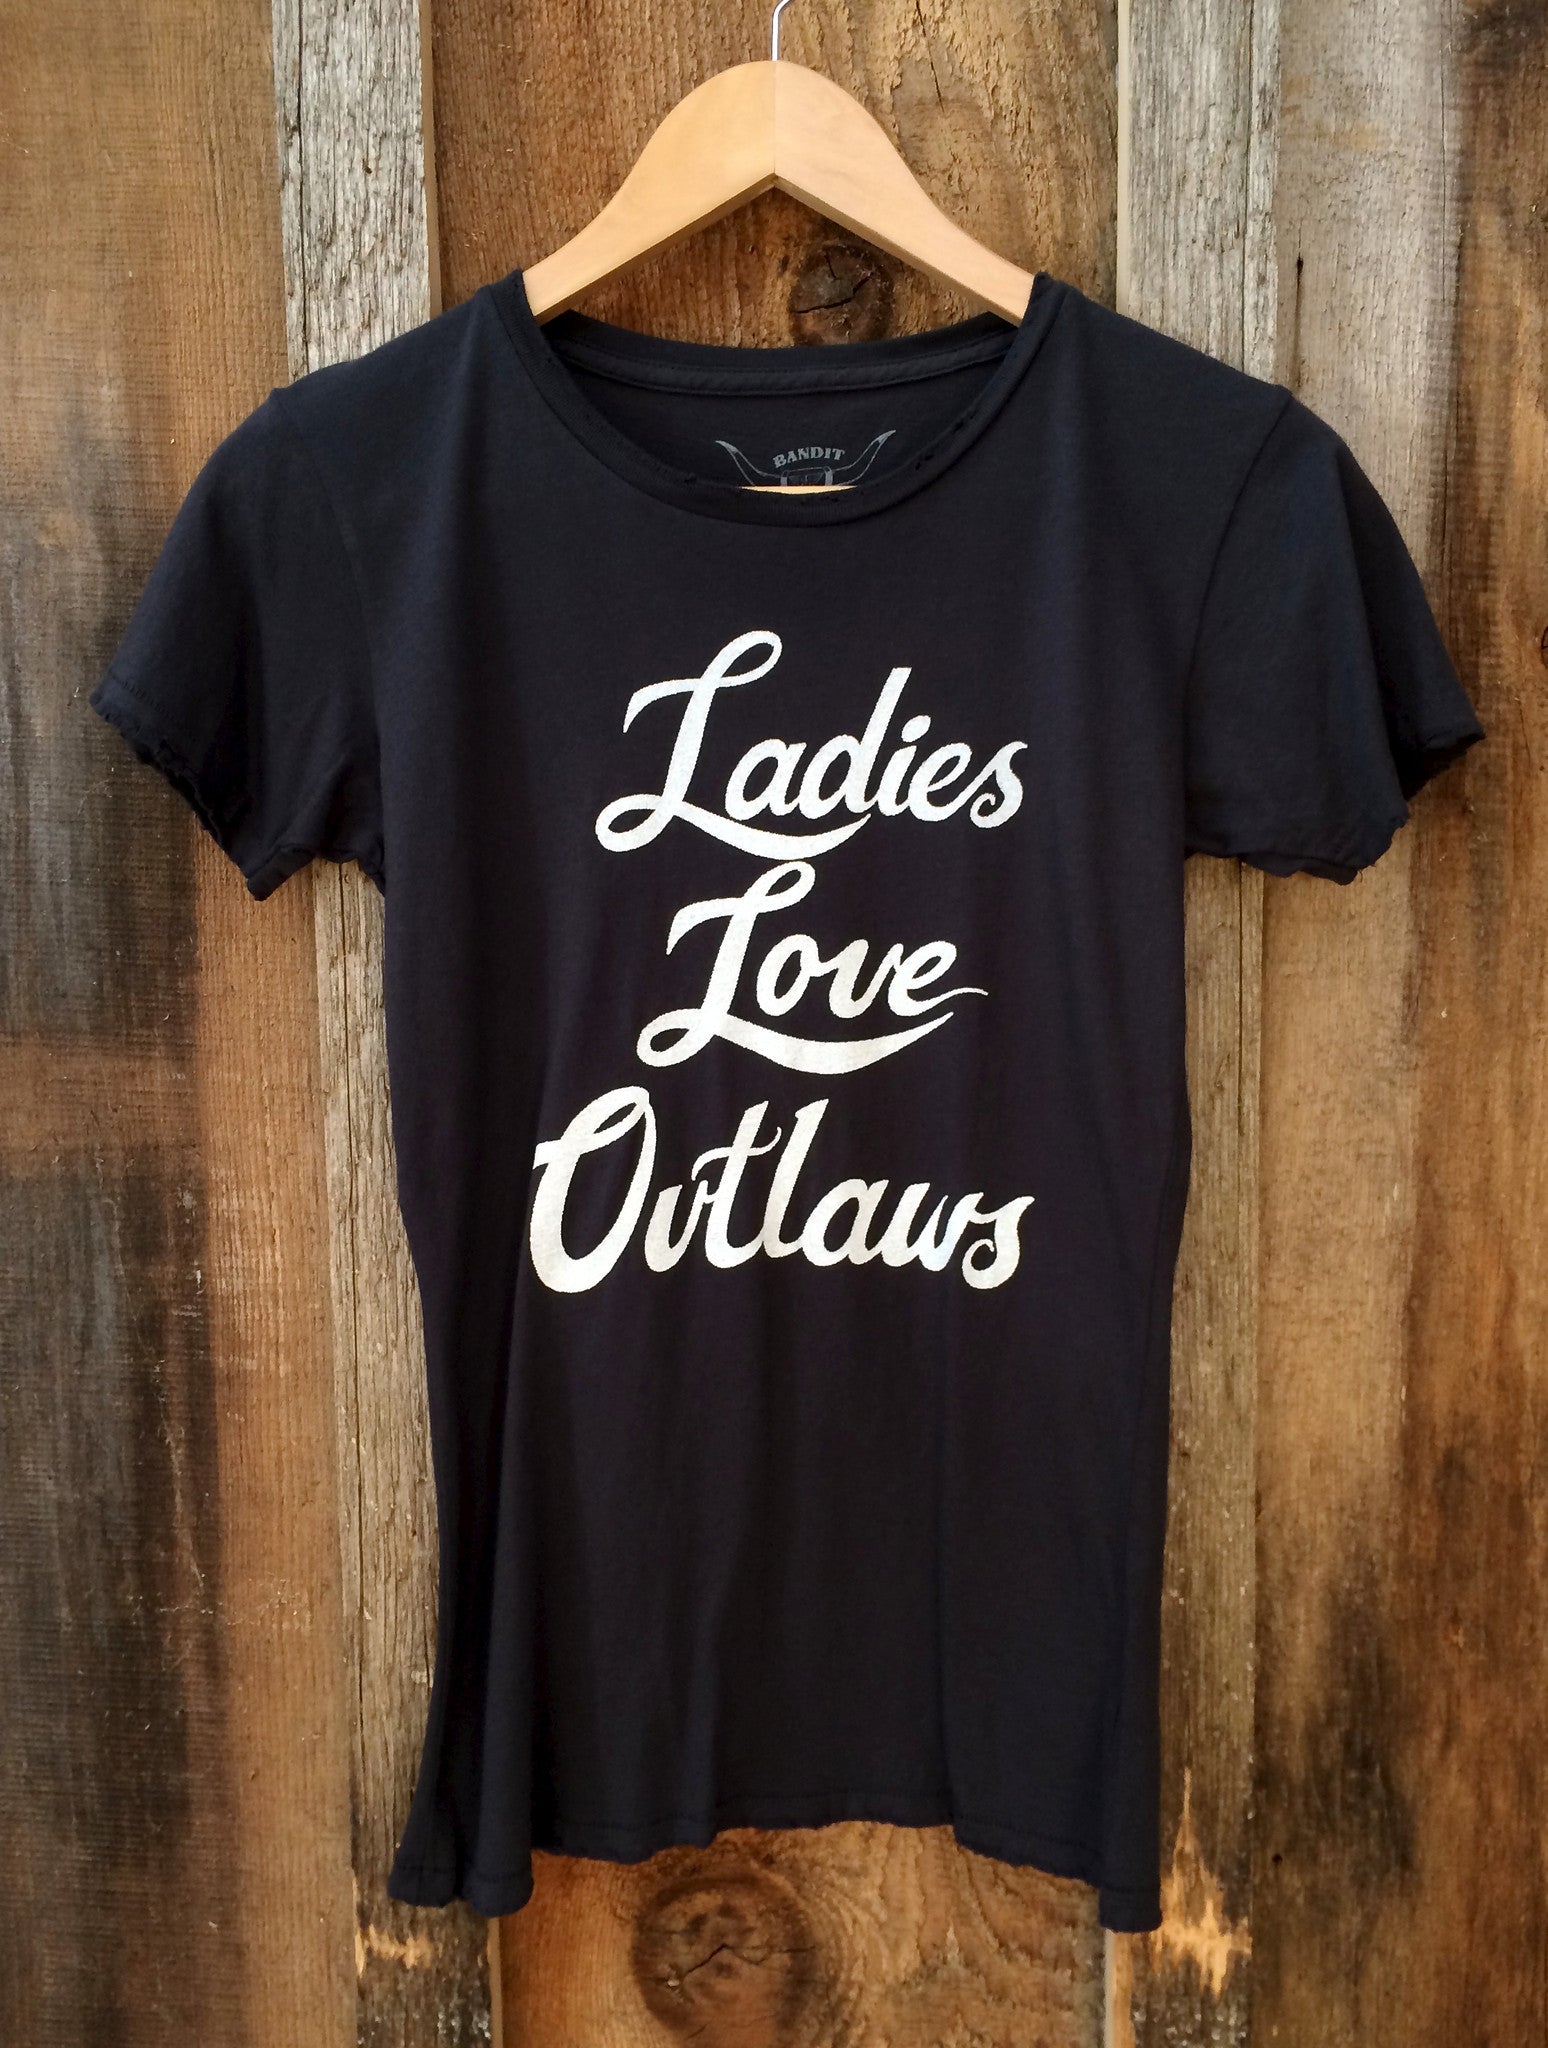 Download Ladies Love Outlaws Women S Vintage Tee Black White Bandit Brand General Store